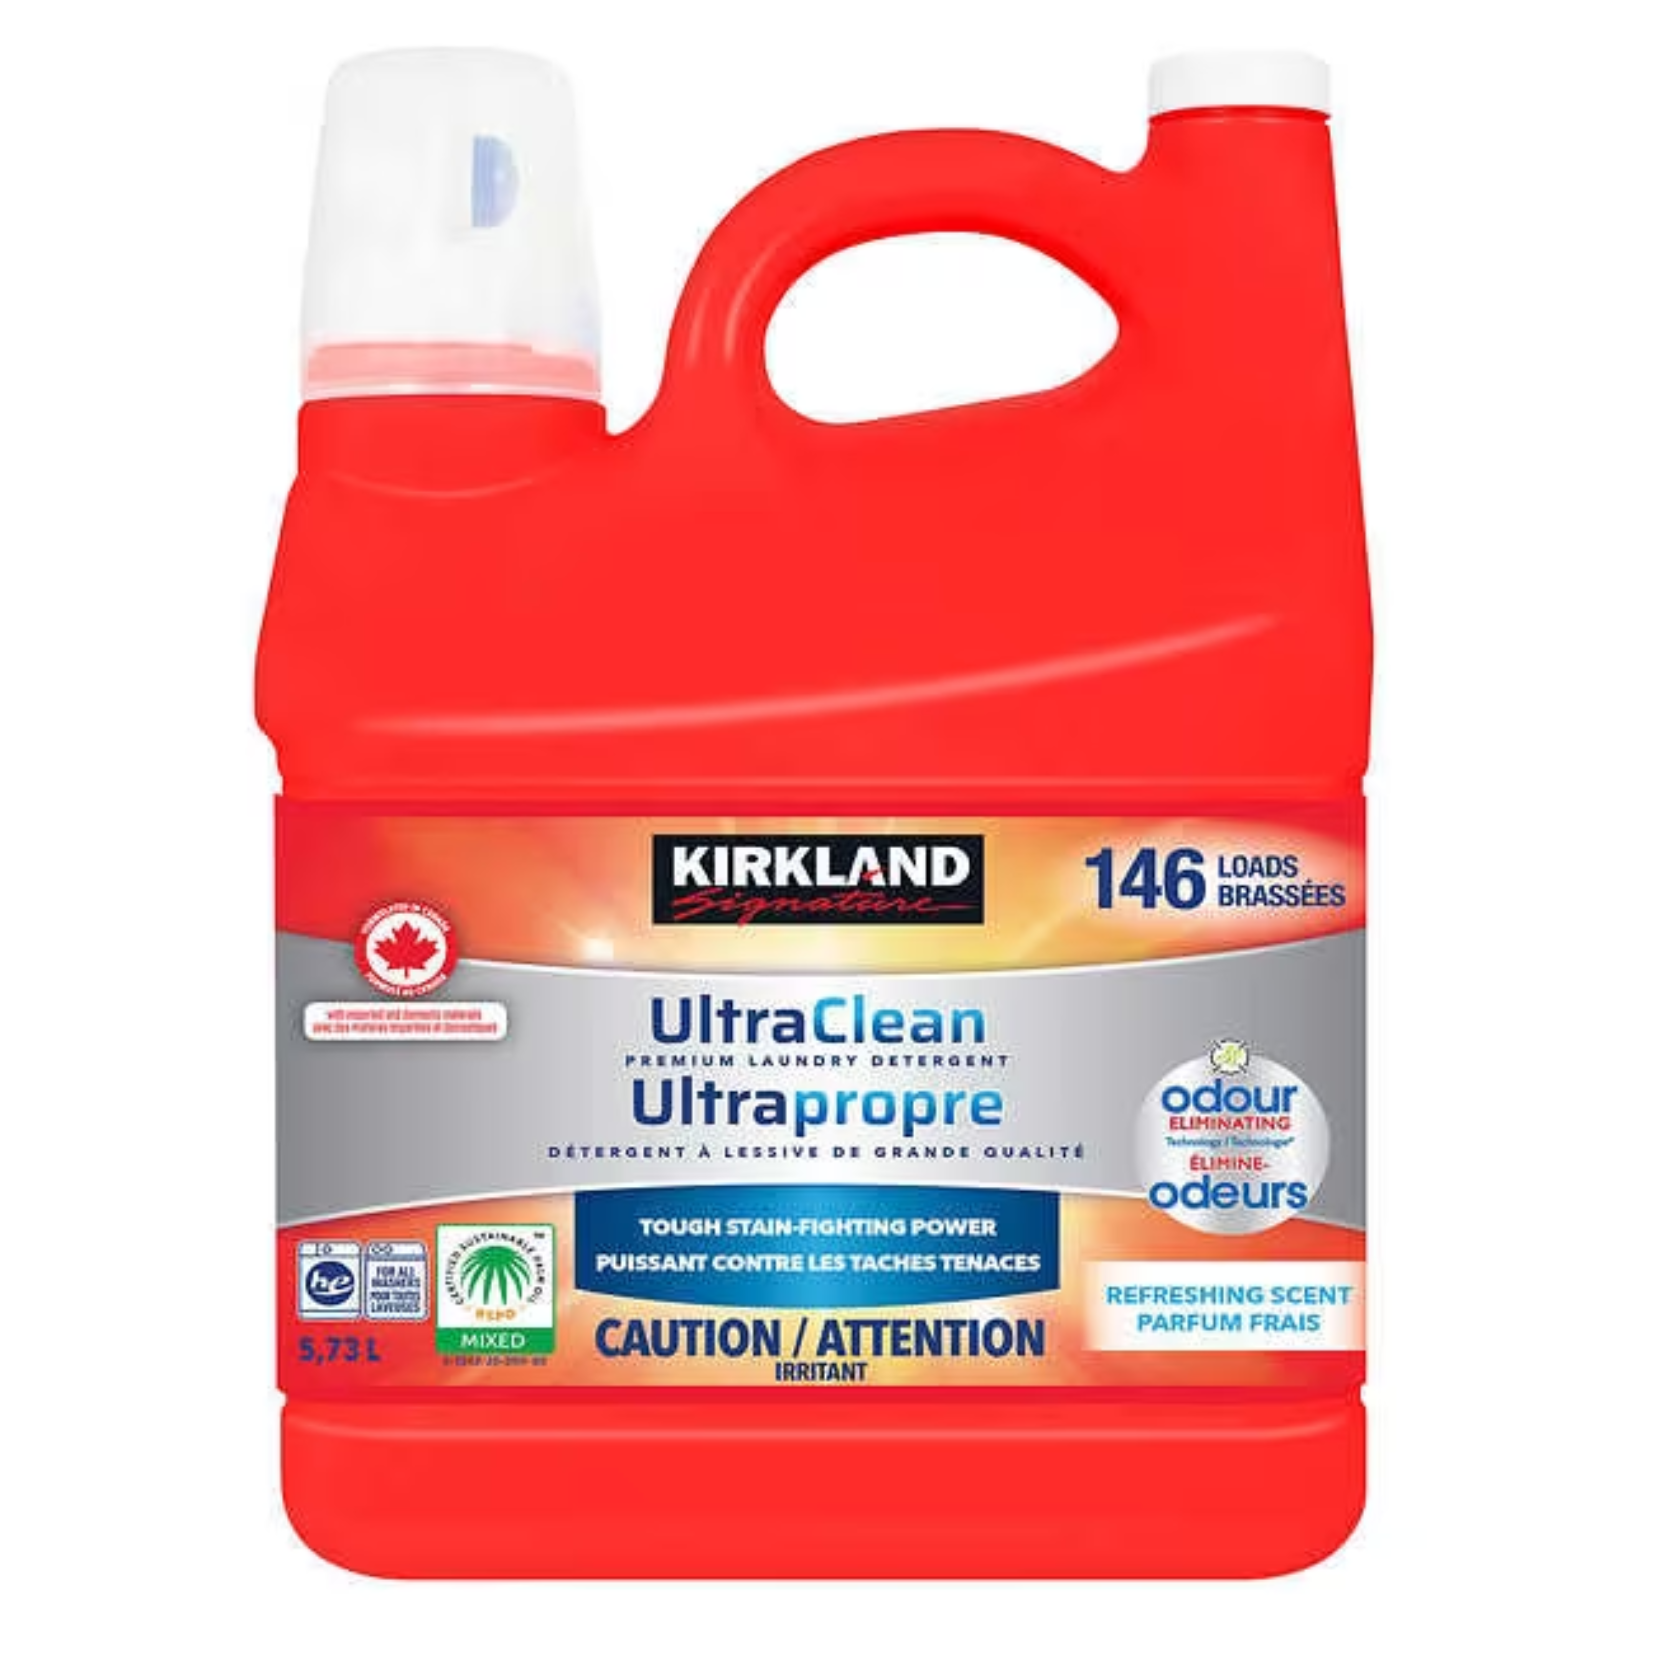 Kirkland Signature Ultra Clean Laundry Detergent 5.73L